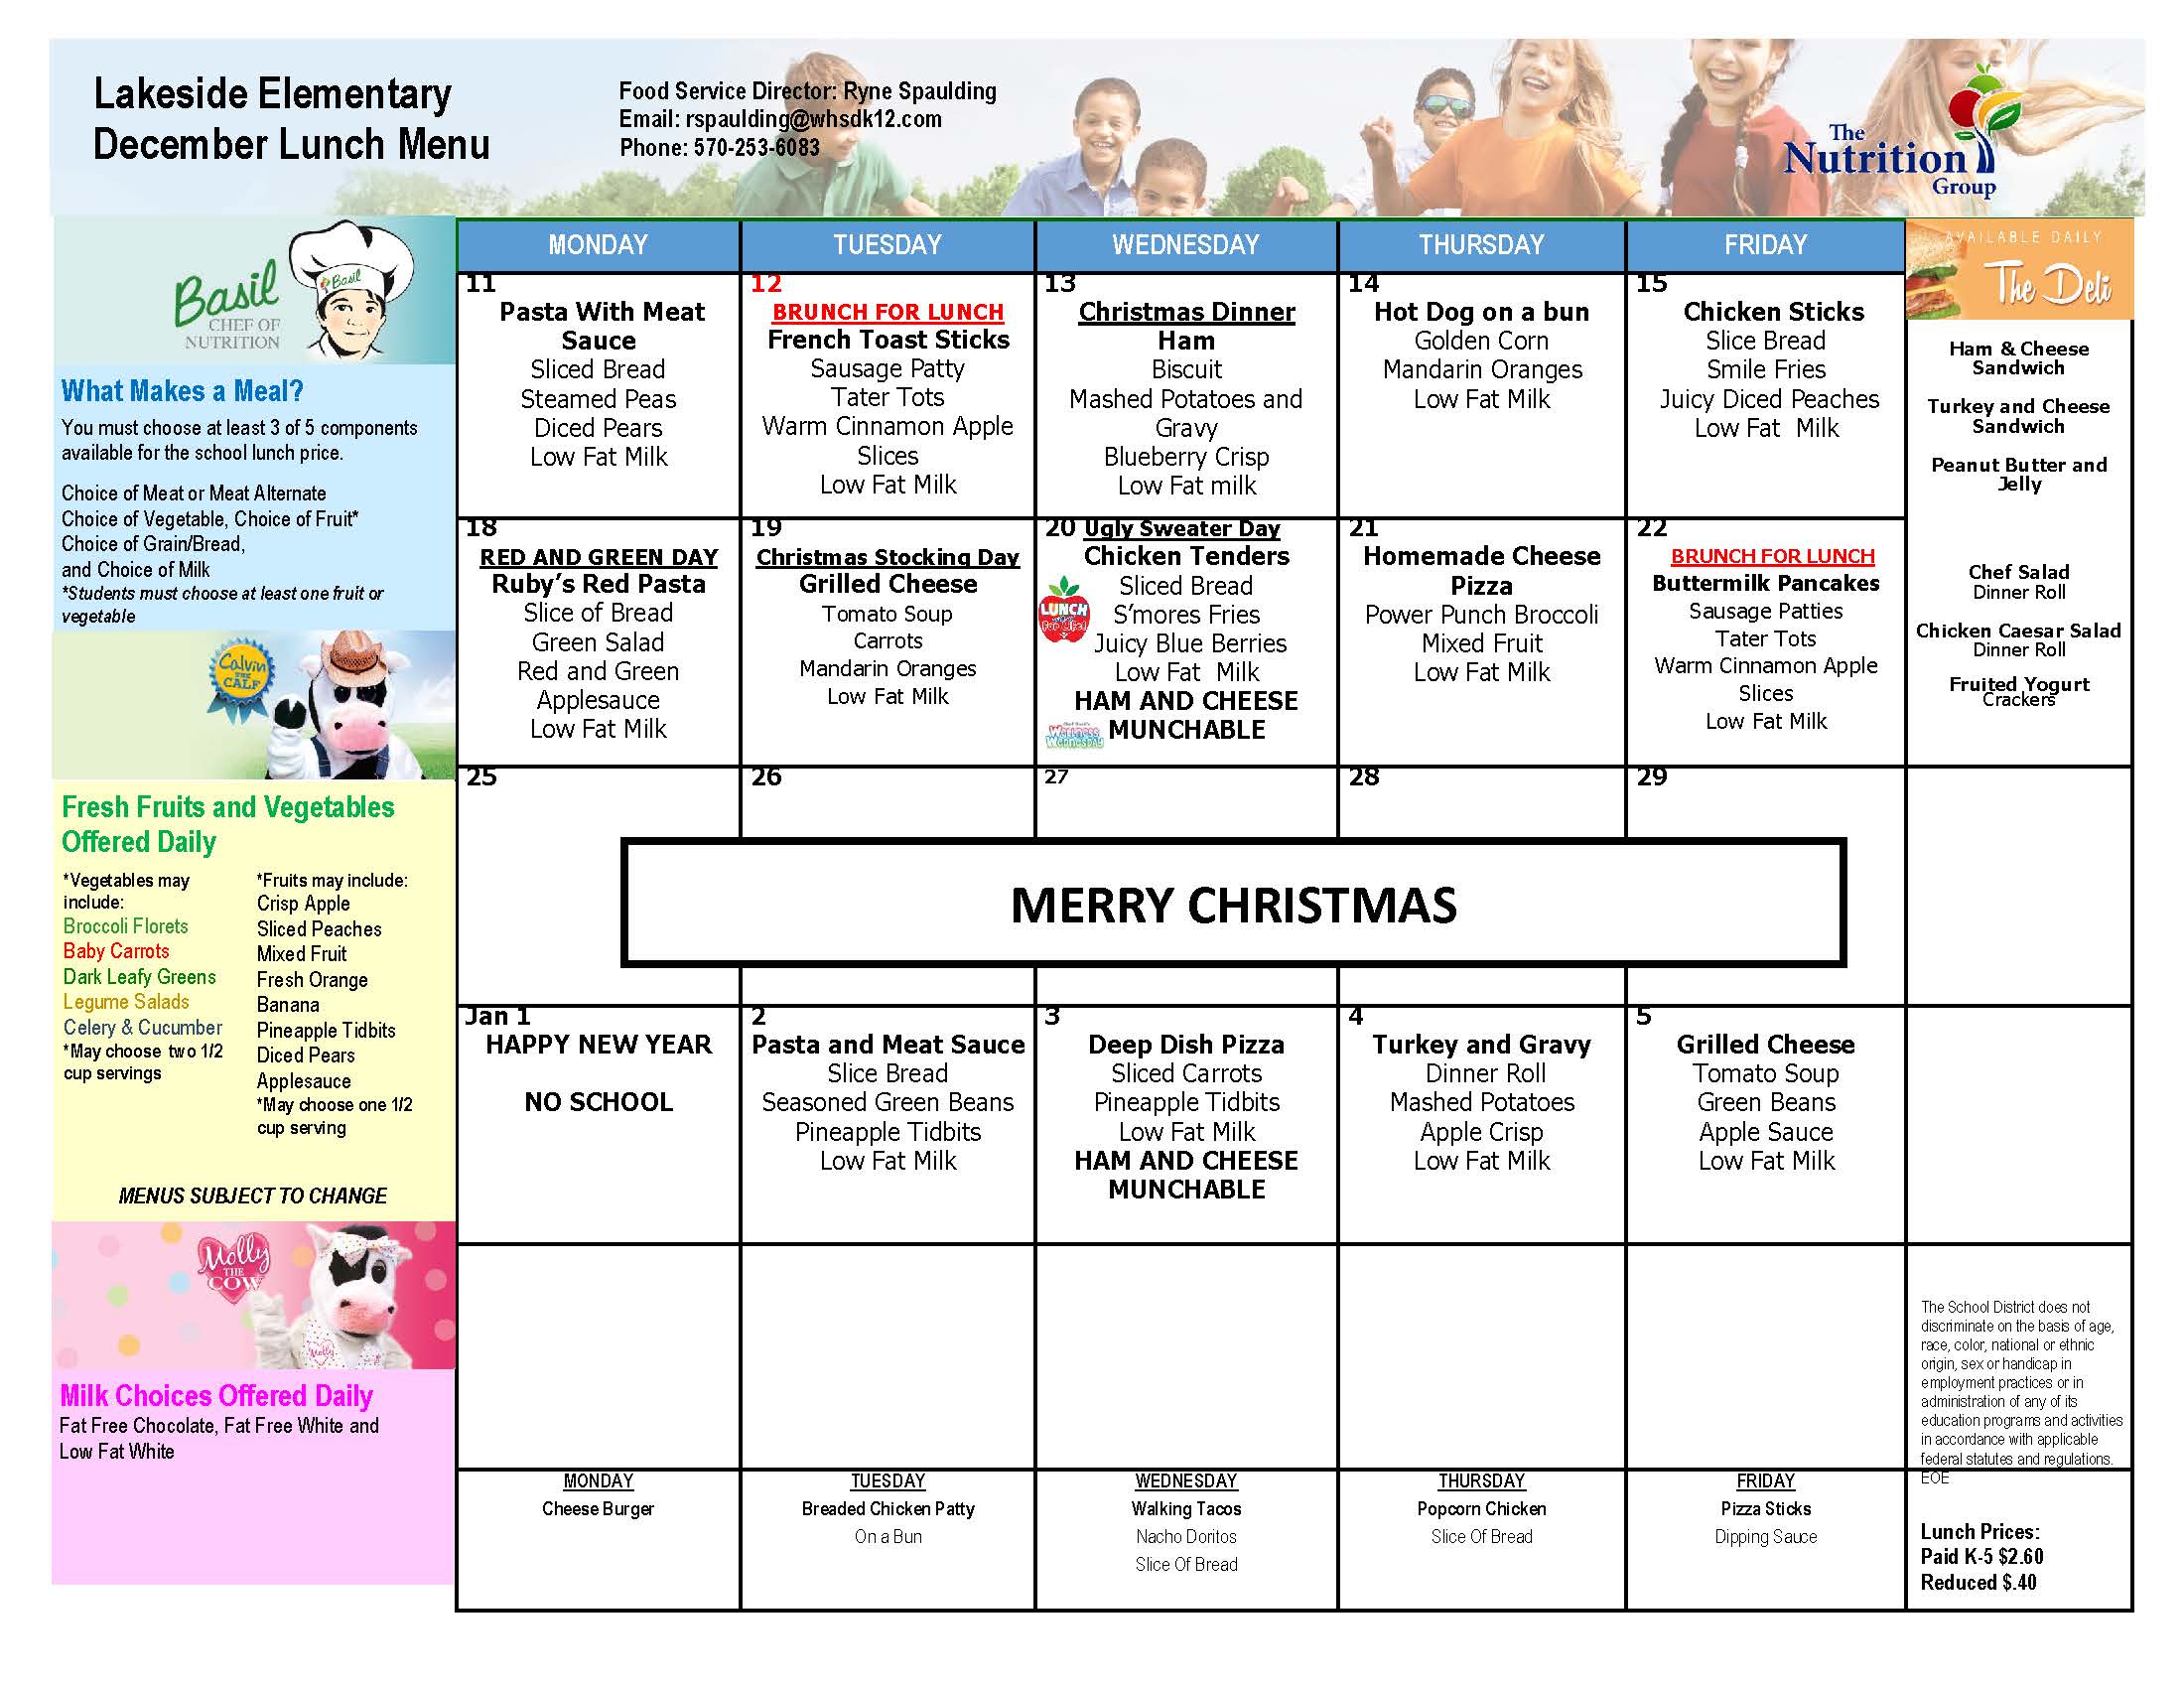 kankakee school district lunch menu calendar